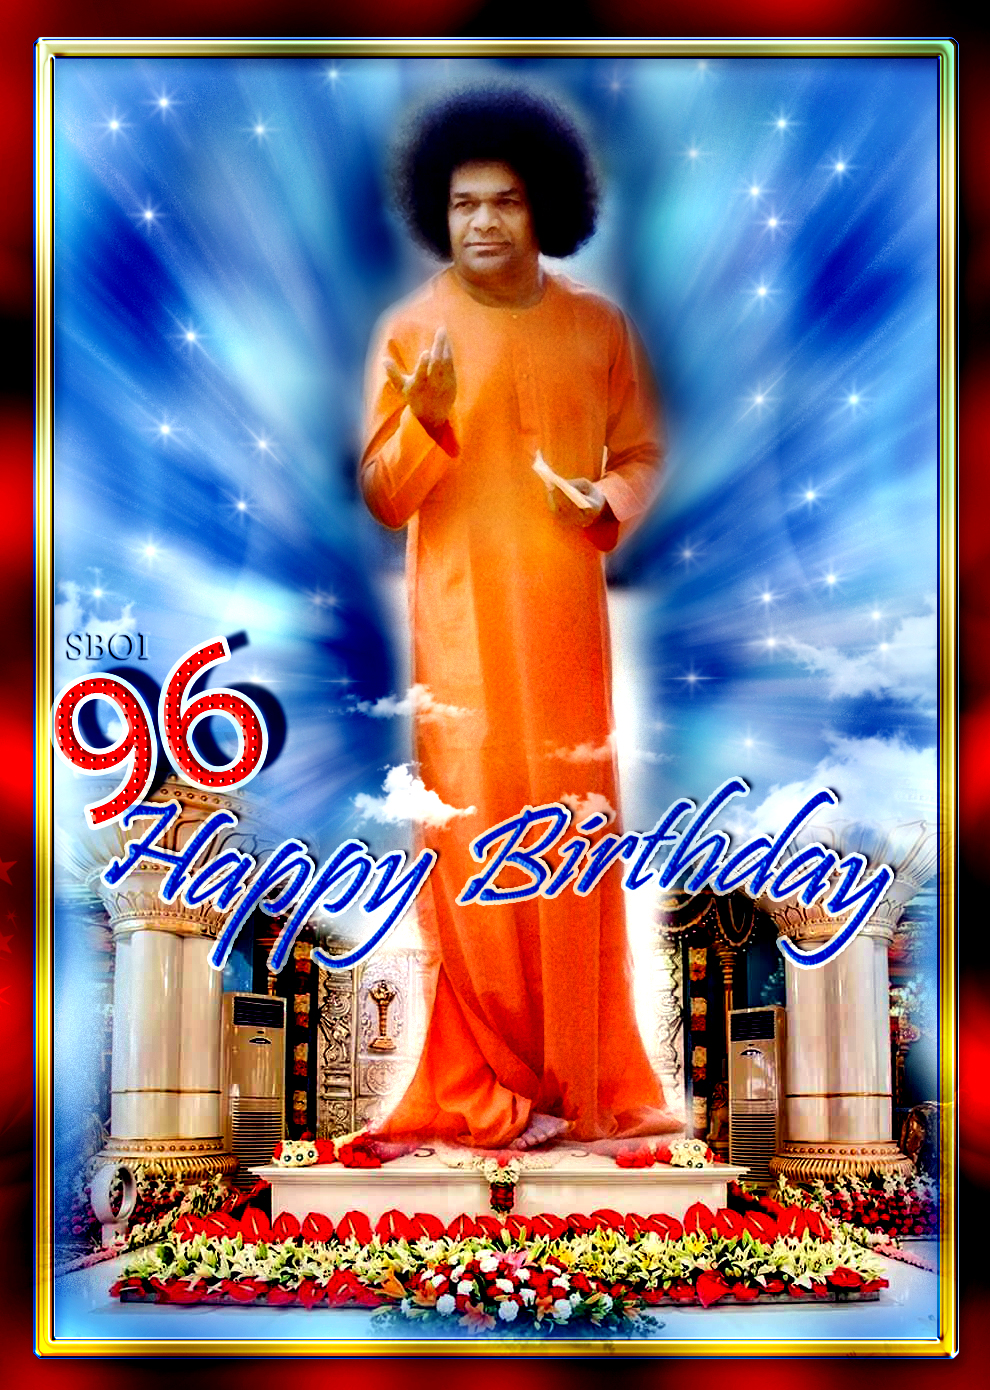 96th-Rising-from-MahaSamadhi-sri-sathya-sai-baba-happy-birthday-Bhagawan-Swami